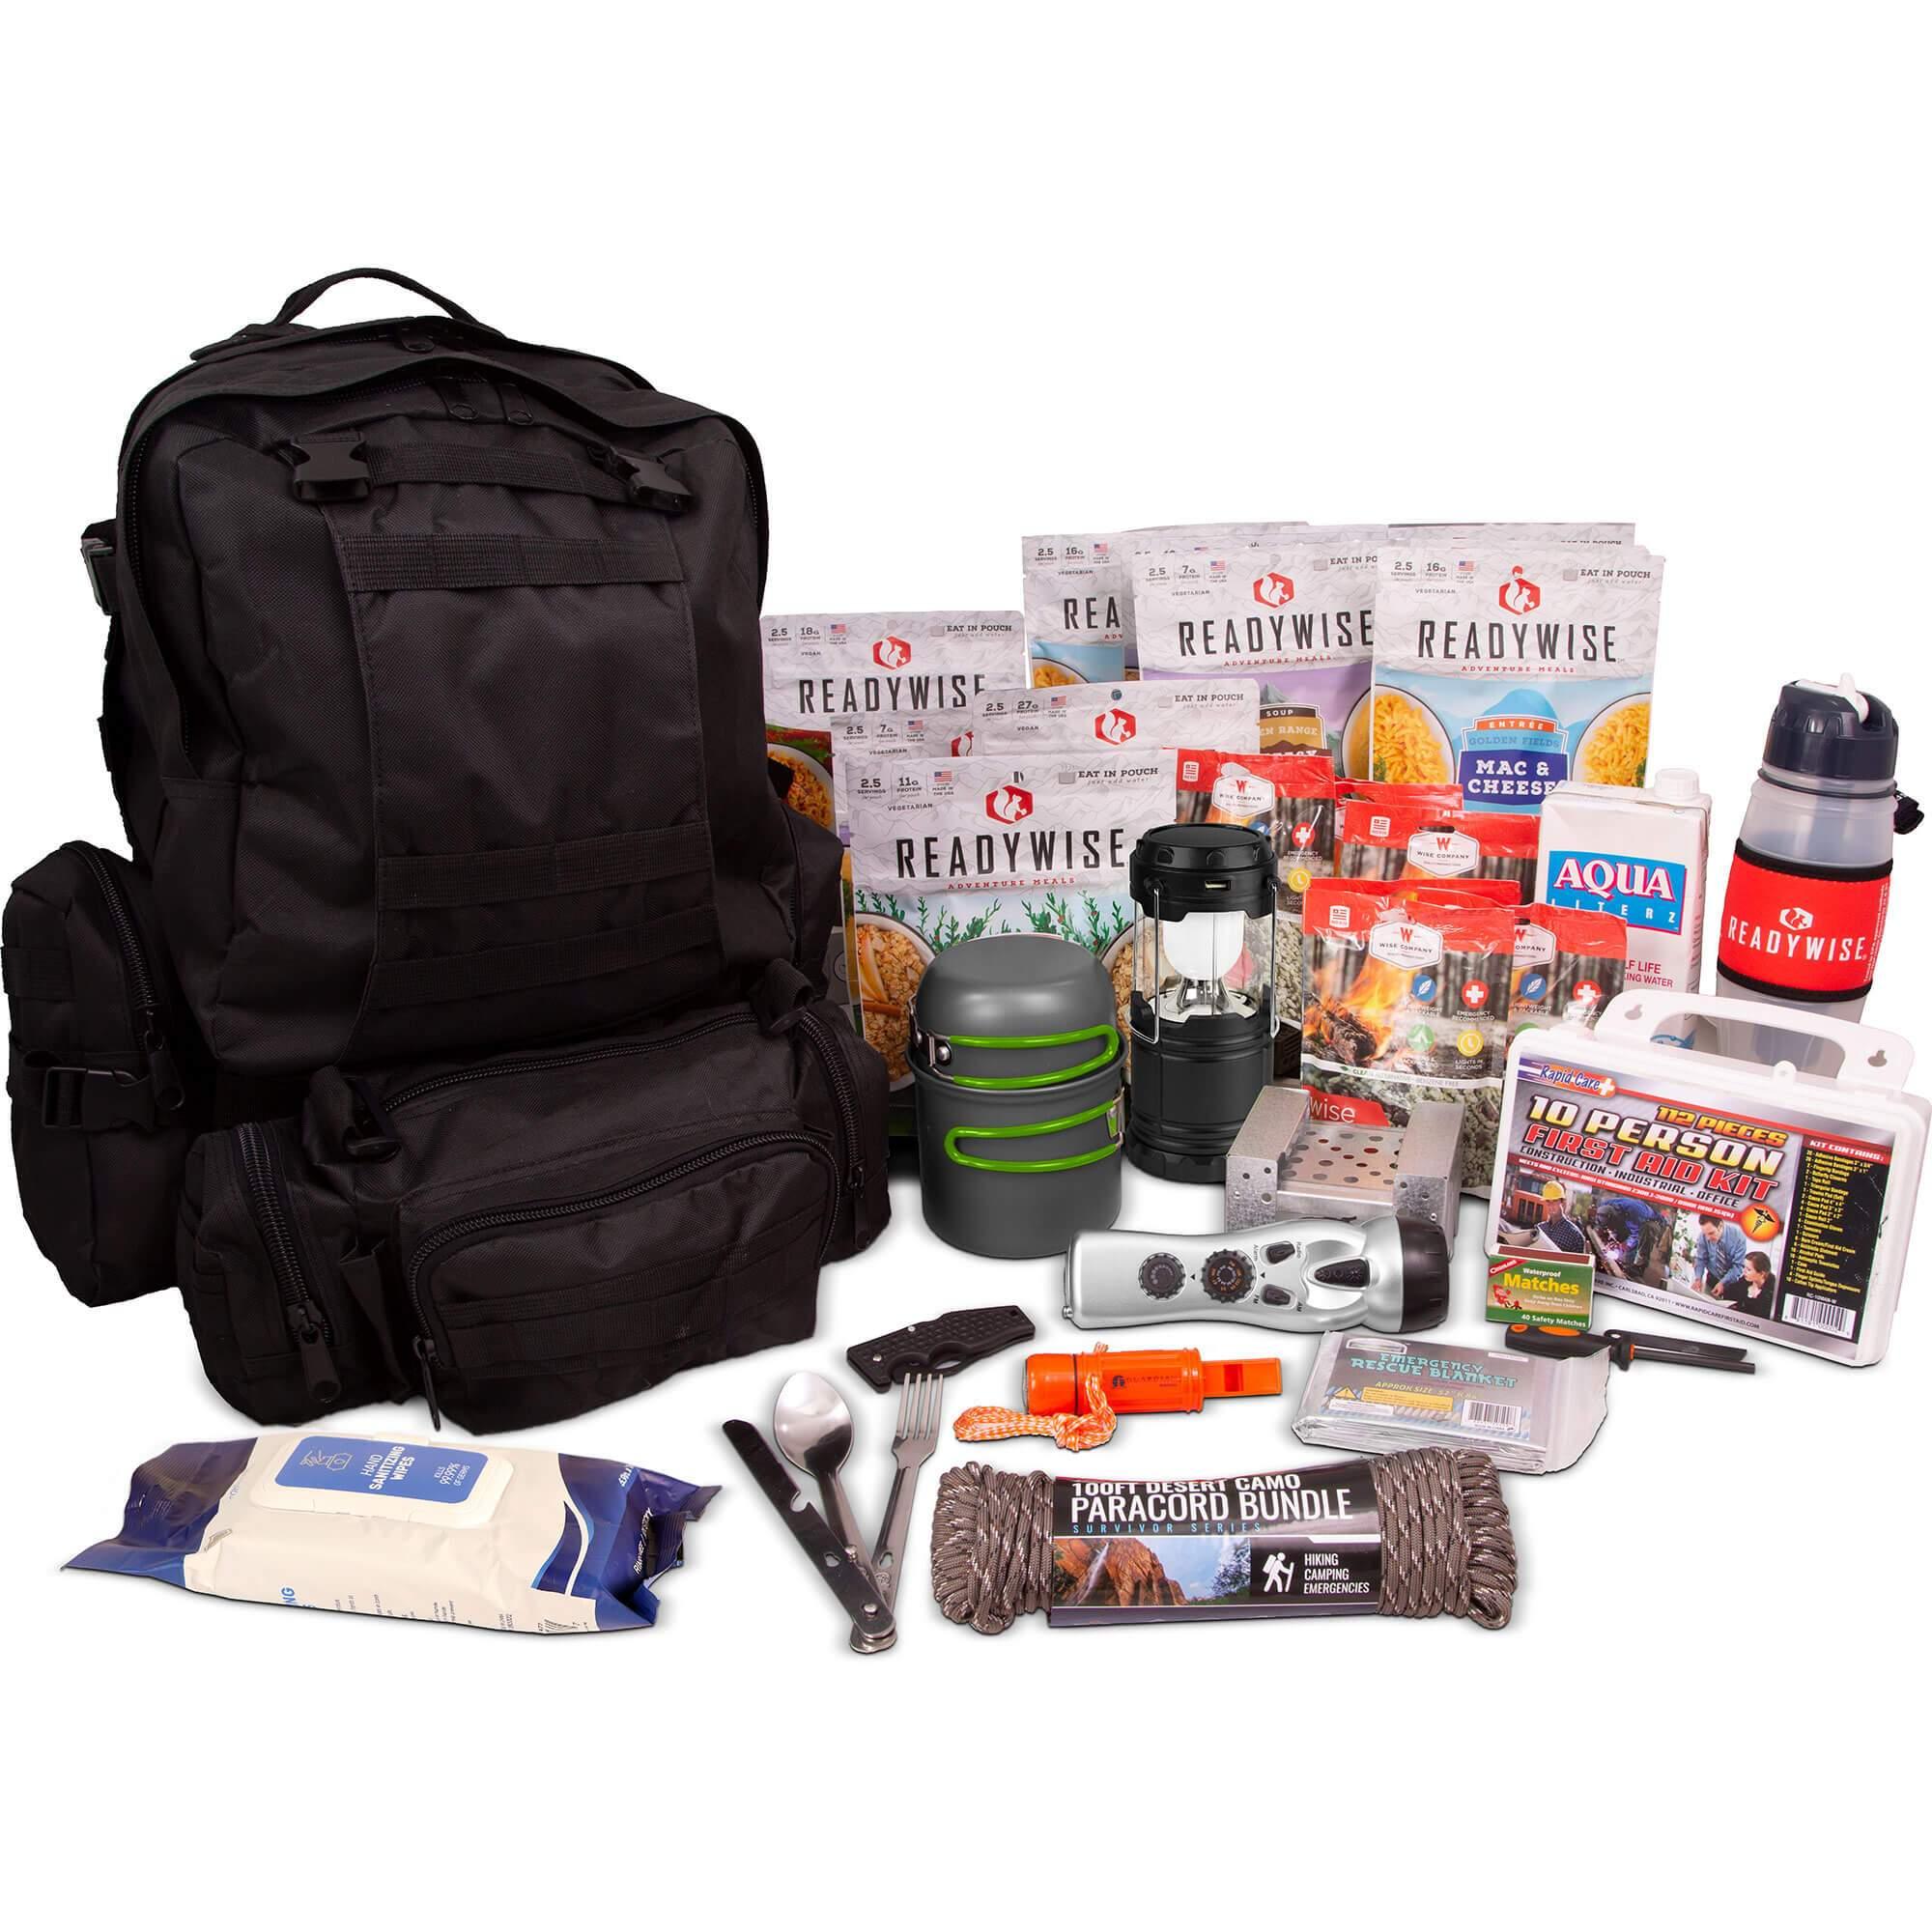 Wilderness Day Bag/3 Day Emergency Survival Bag : r/Survival